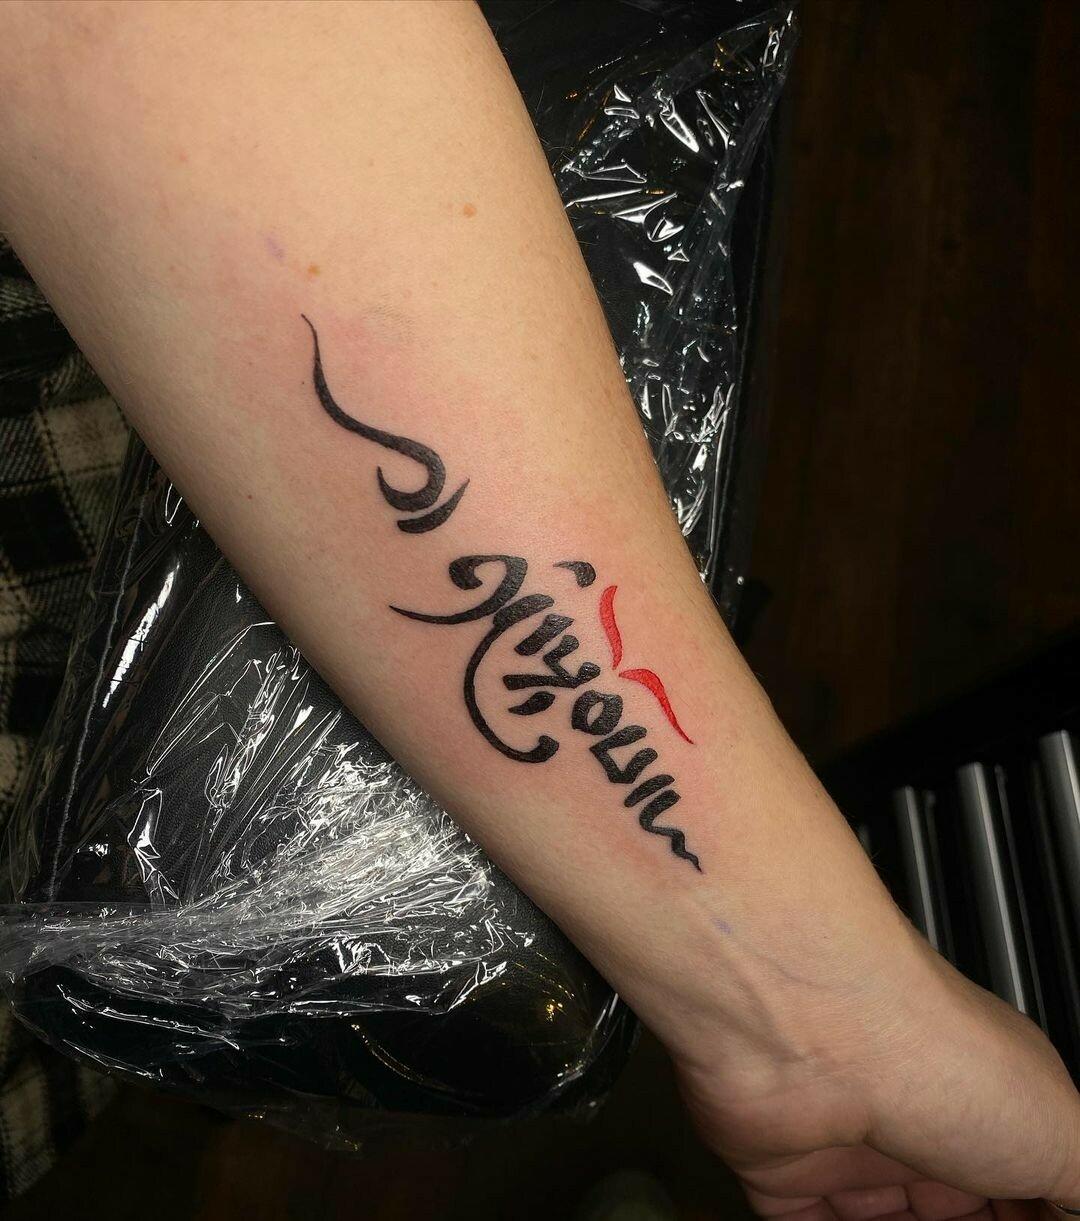 Inksearch tattoo Amy Gough